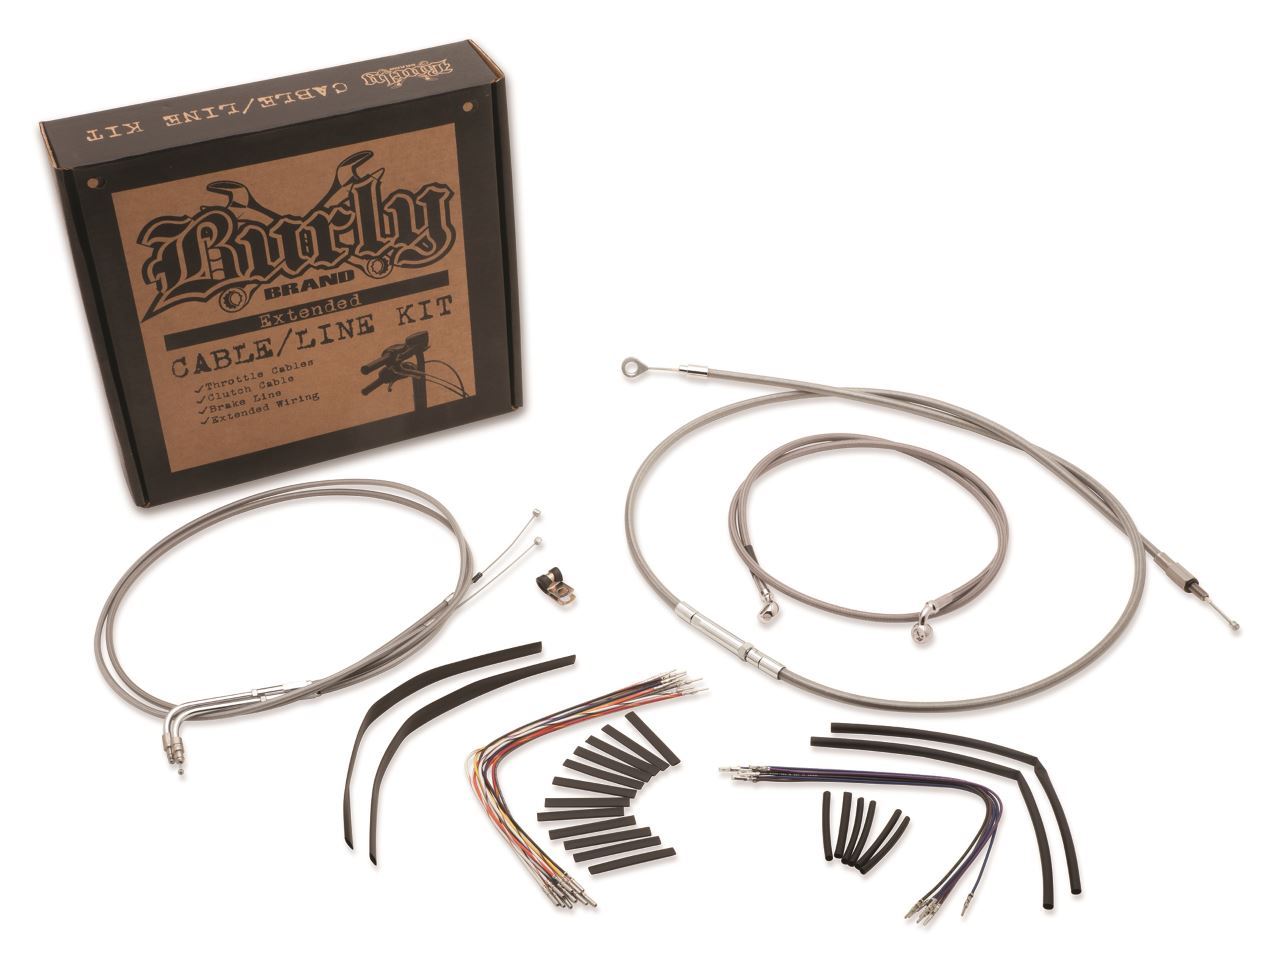 Burly B30-1063 Braided Cable Kits For 2000-2014 Harley Davidson Softail Models